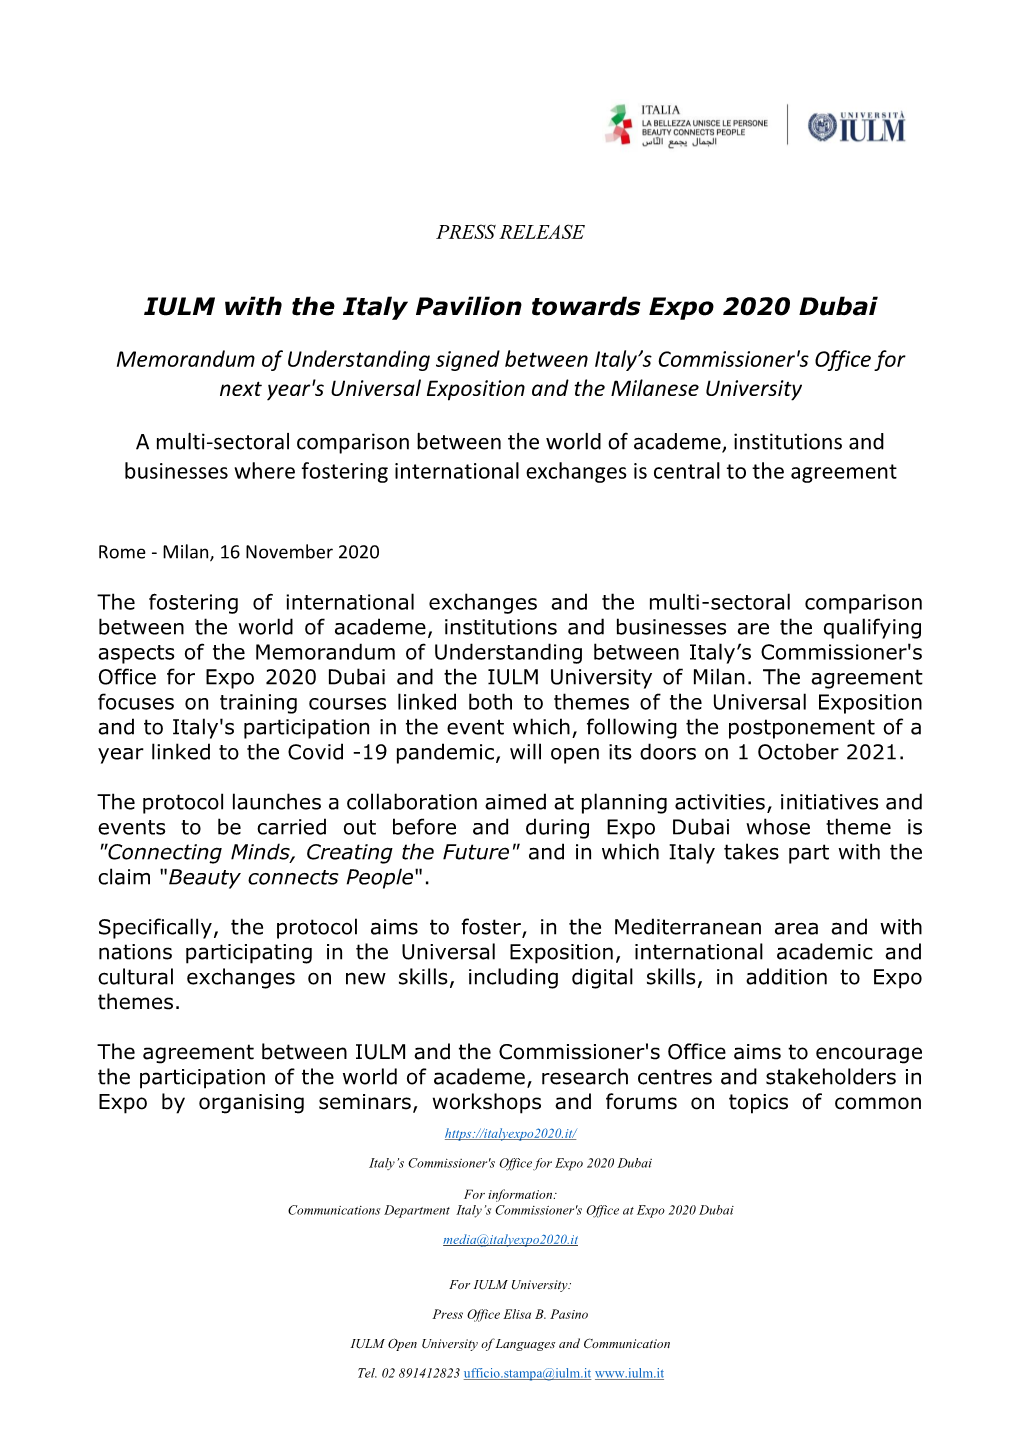 IULM with the Italy Pavilion Towards Expo 2020 Dubai